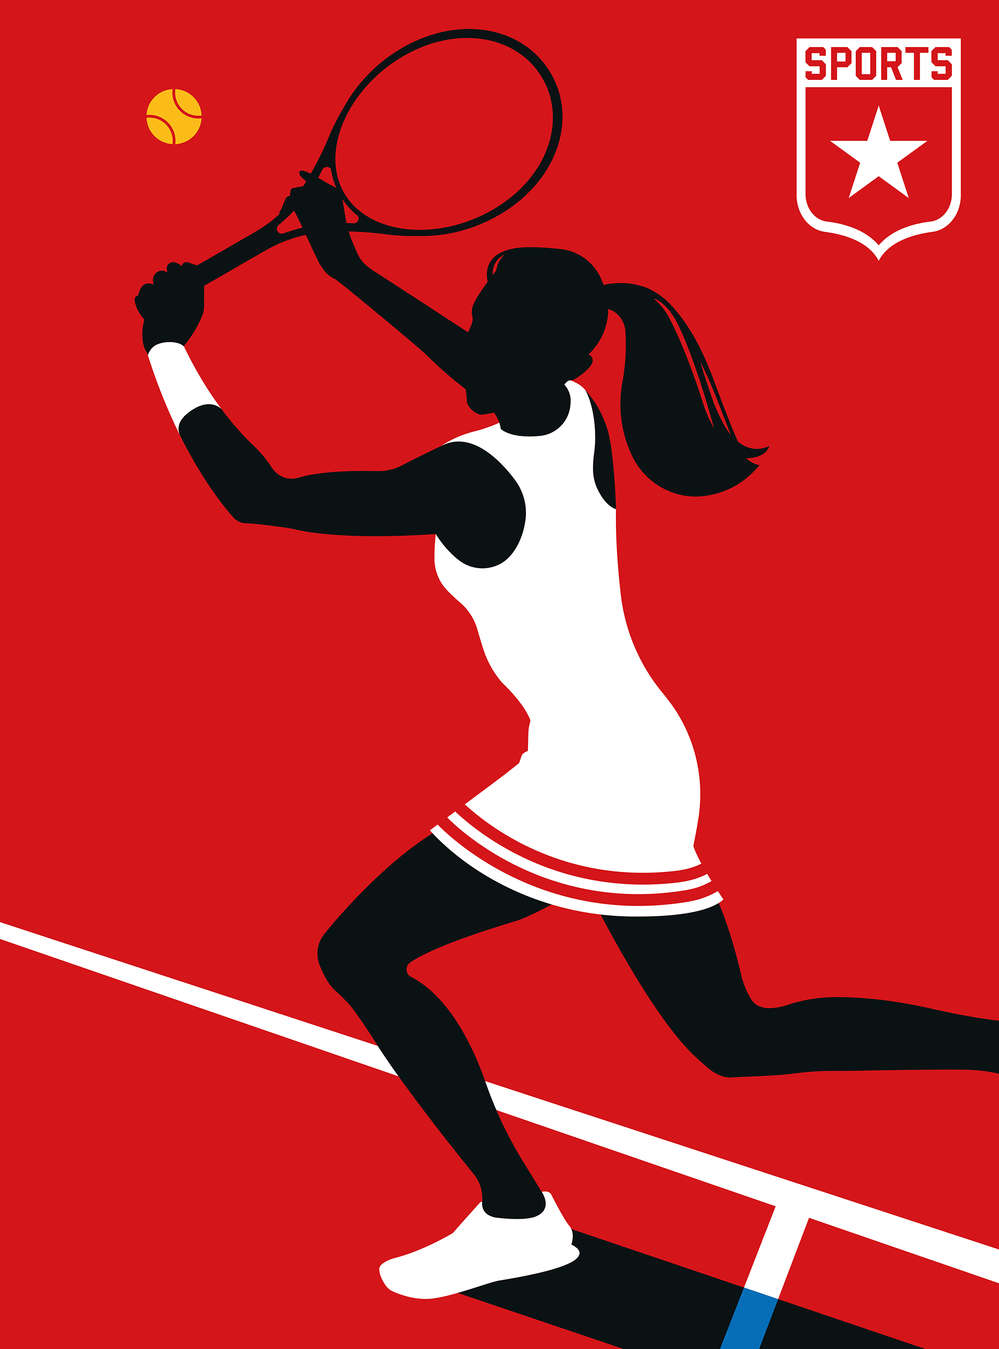             Photo wallpaper sport tennis motif player icon
        